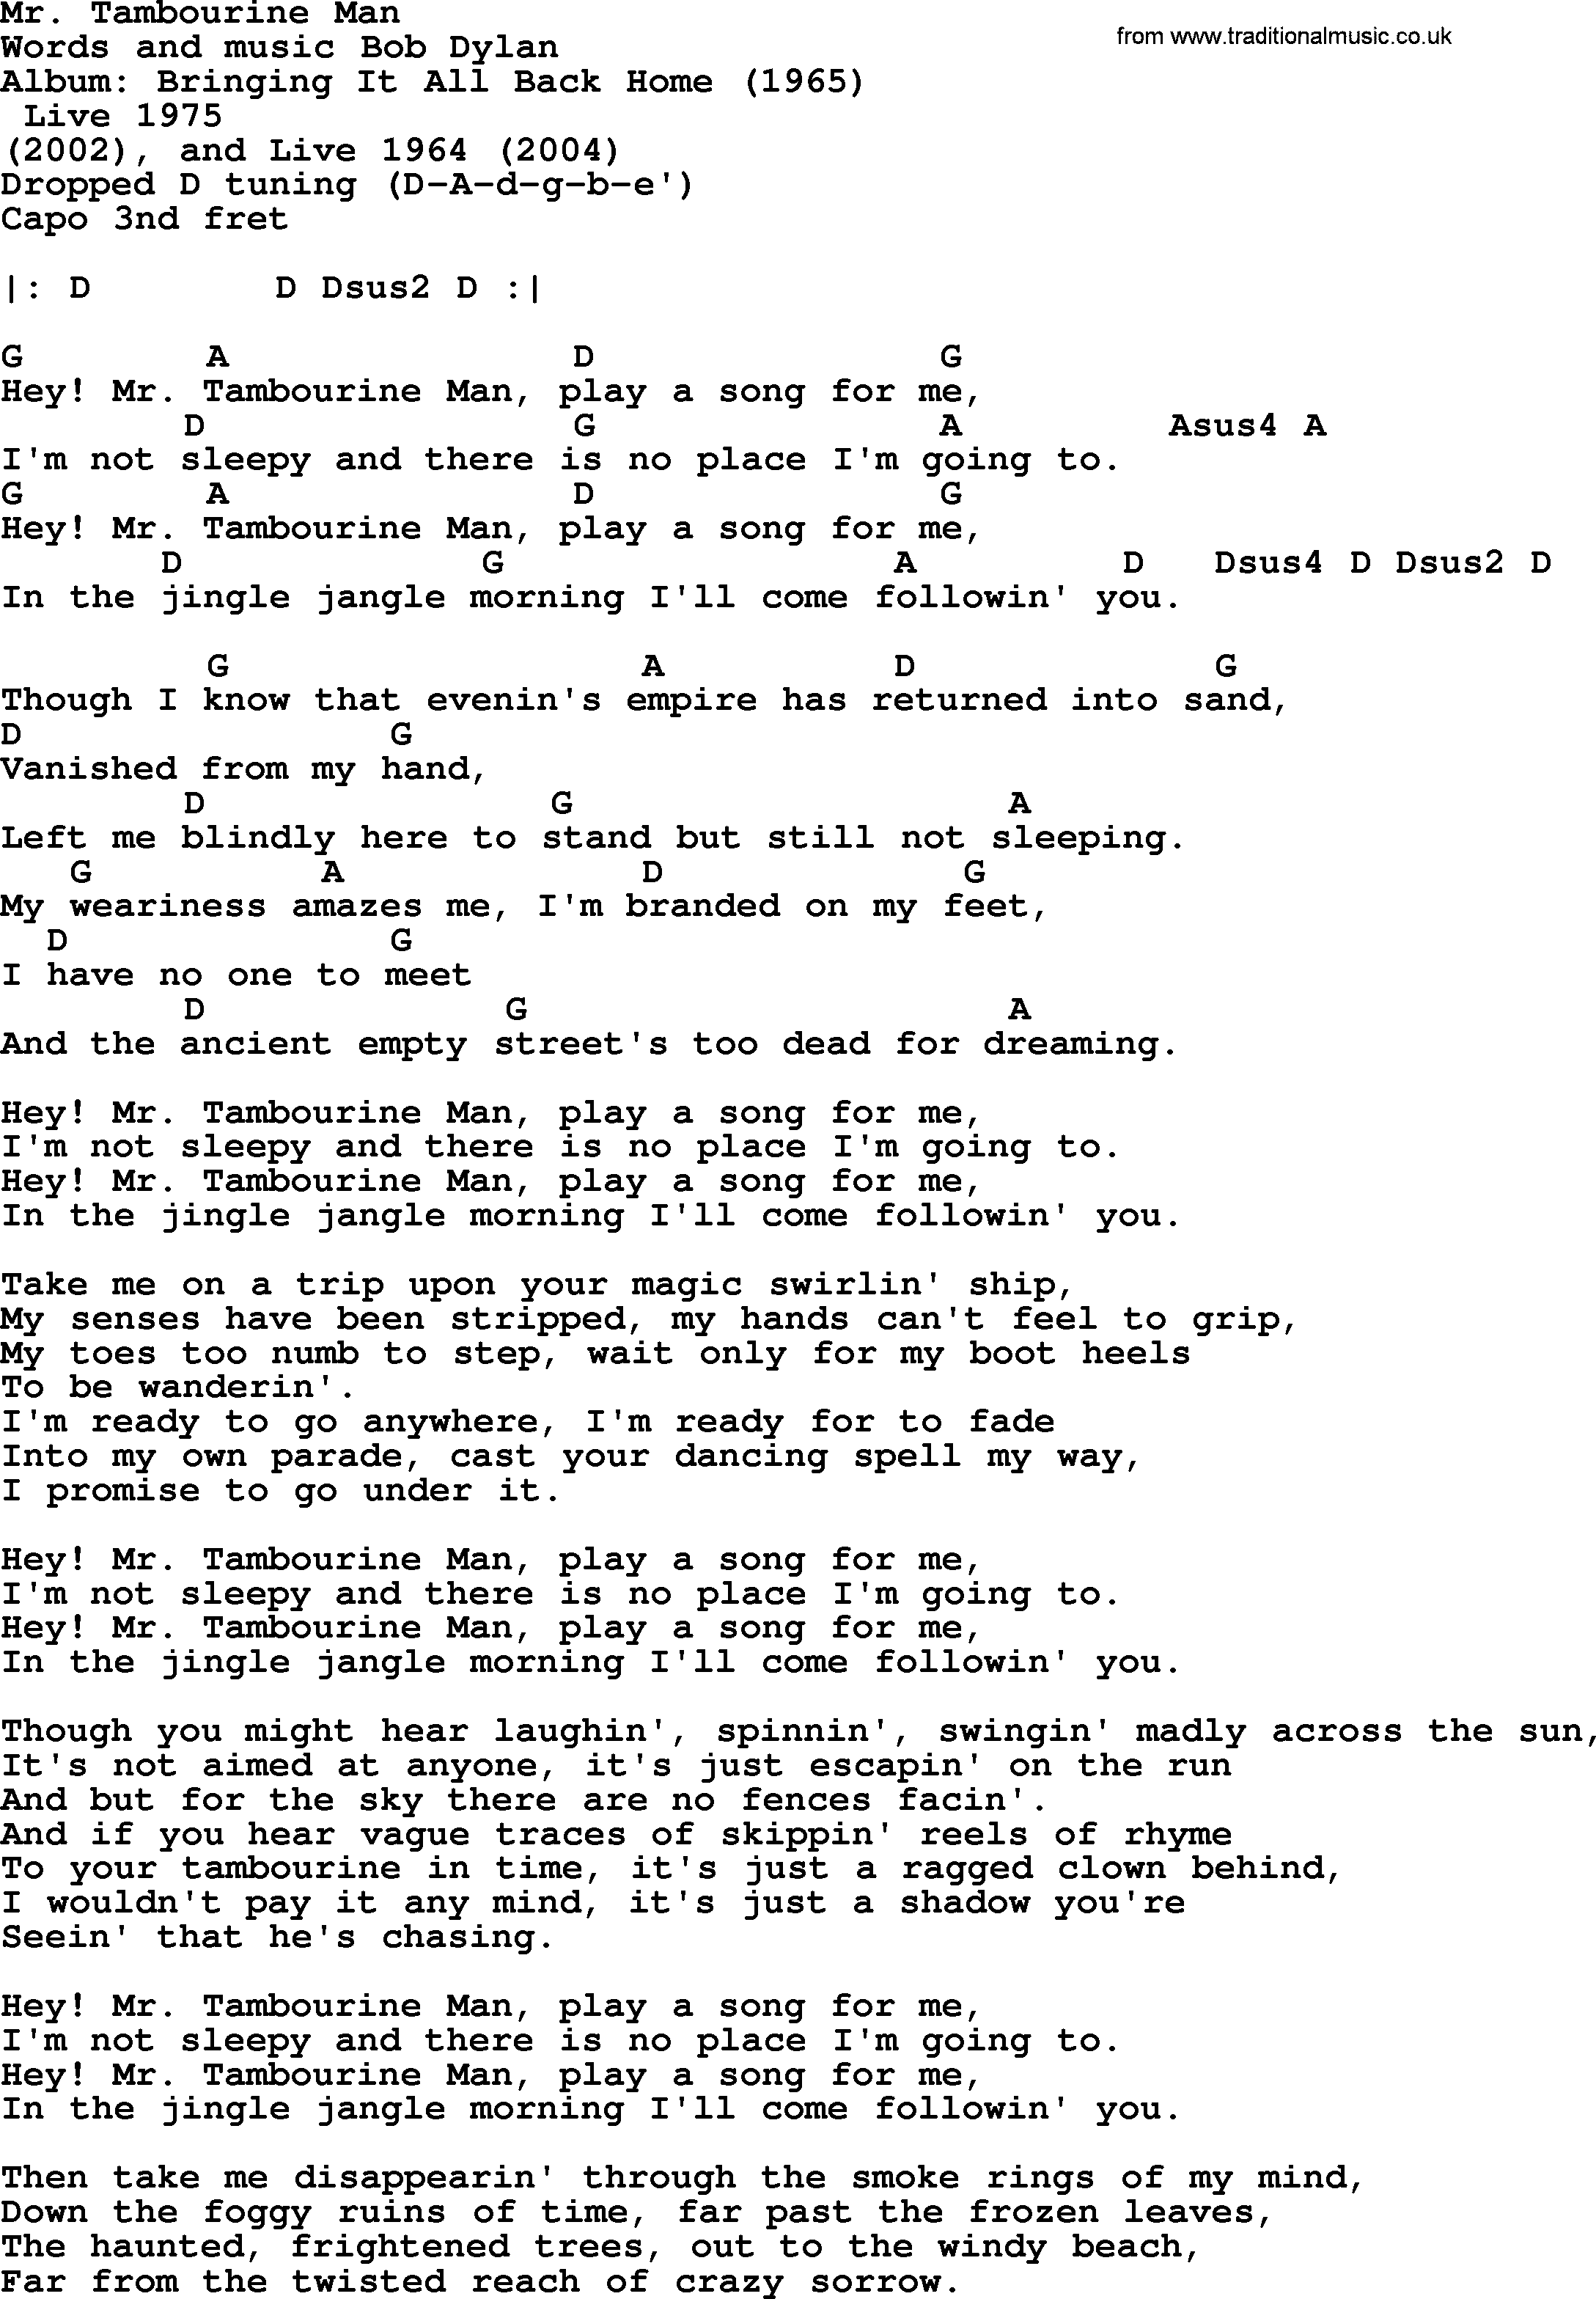 Bob Dylan song, lyrics with chords - Mr. Tambourine Man